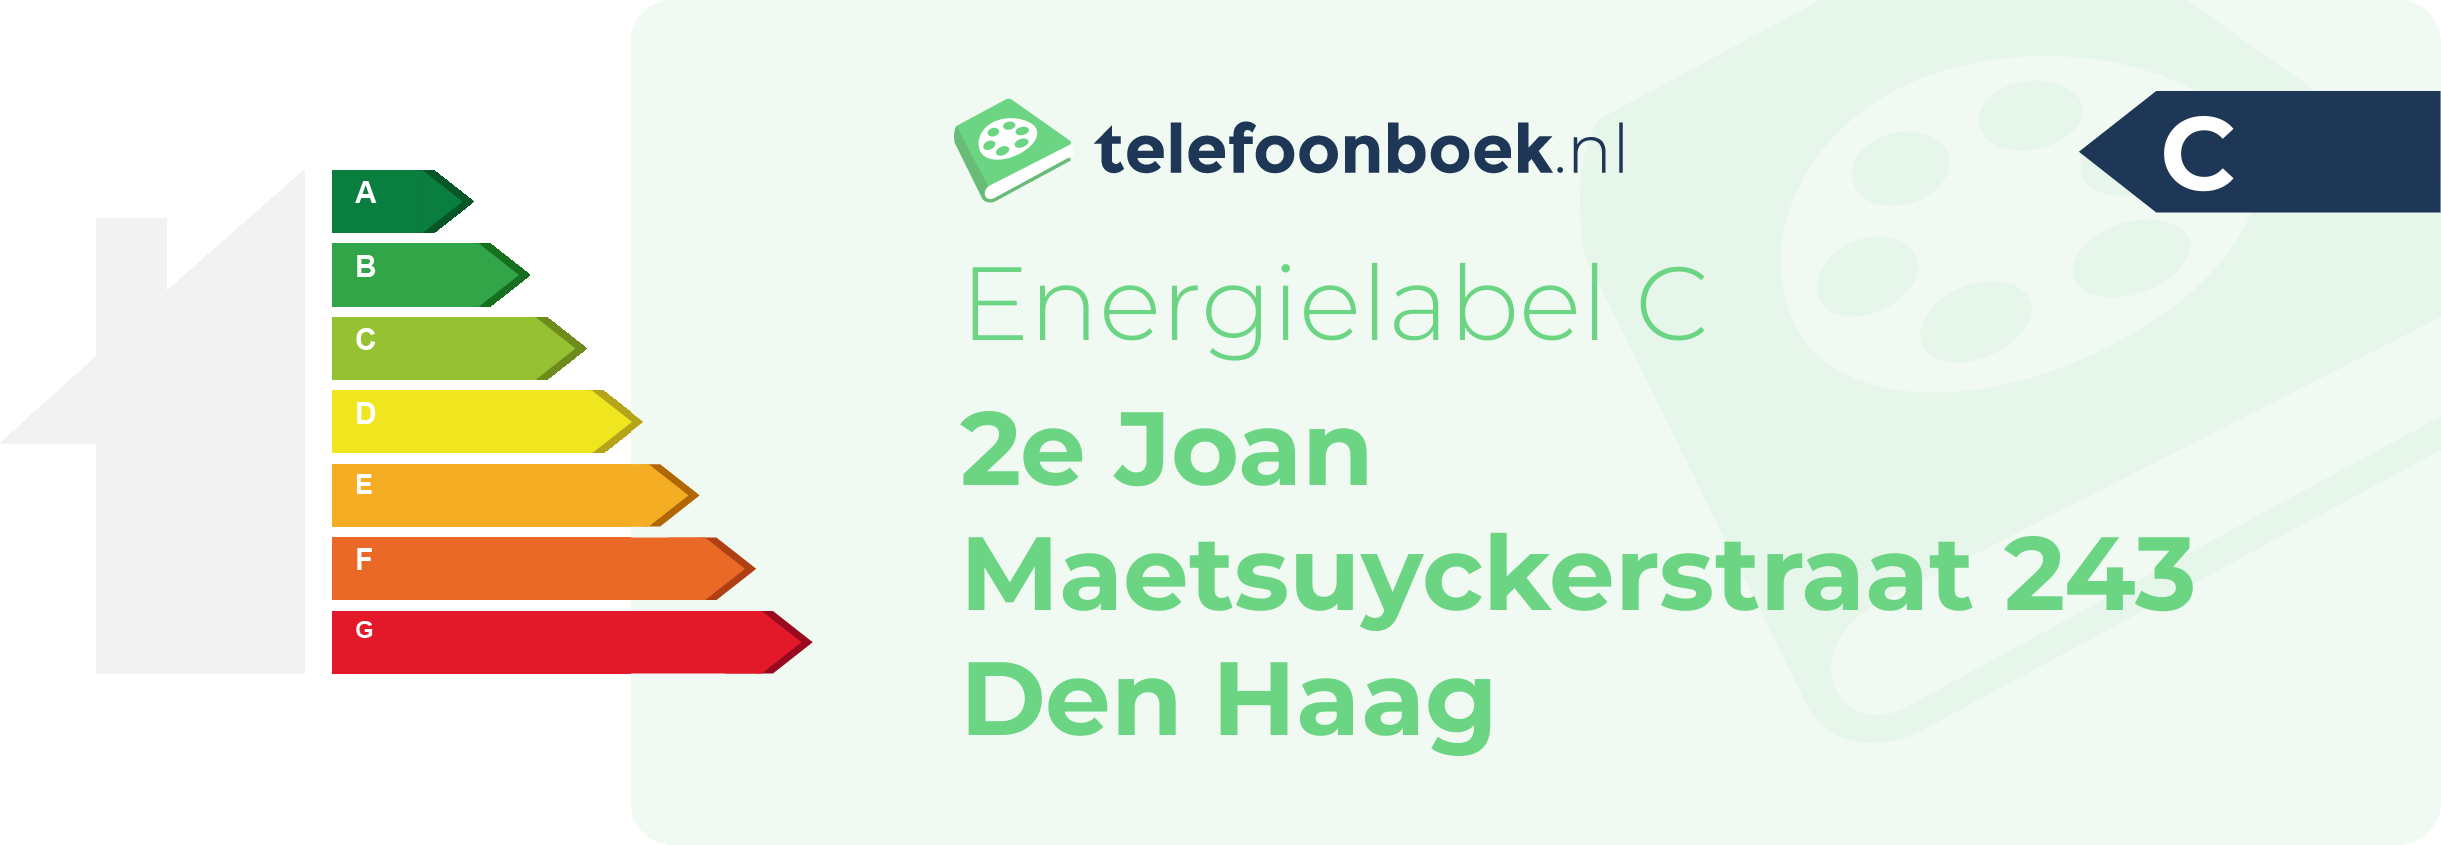 Energielabel 2e Joan Maetsuyckerstraat 243 Den Haag